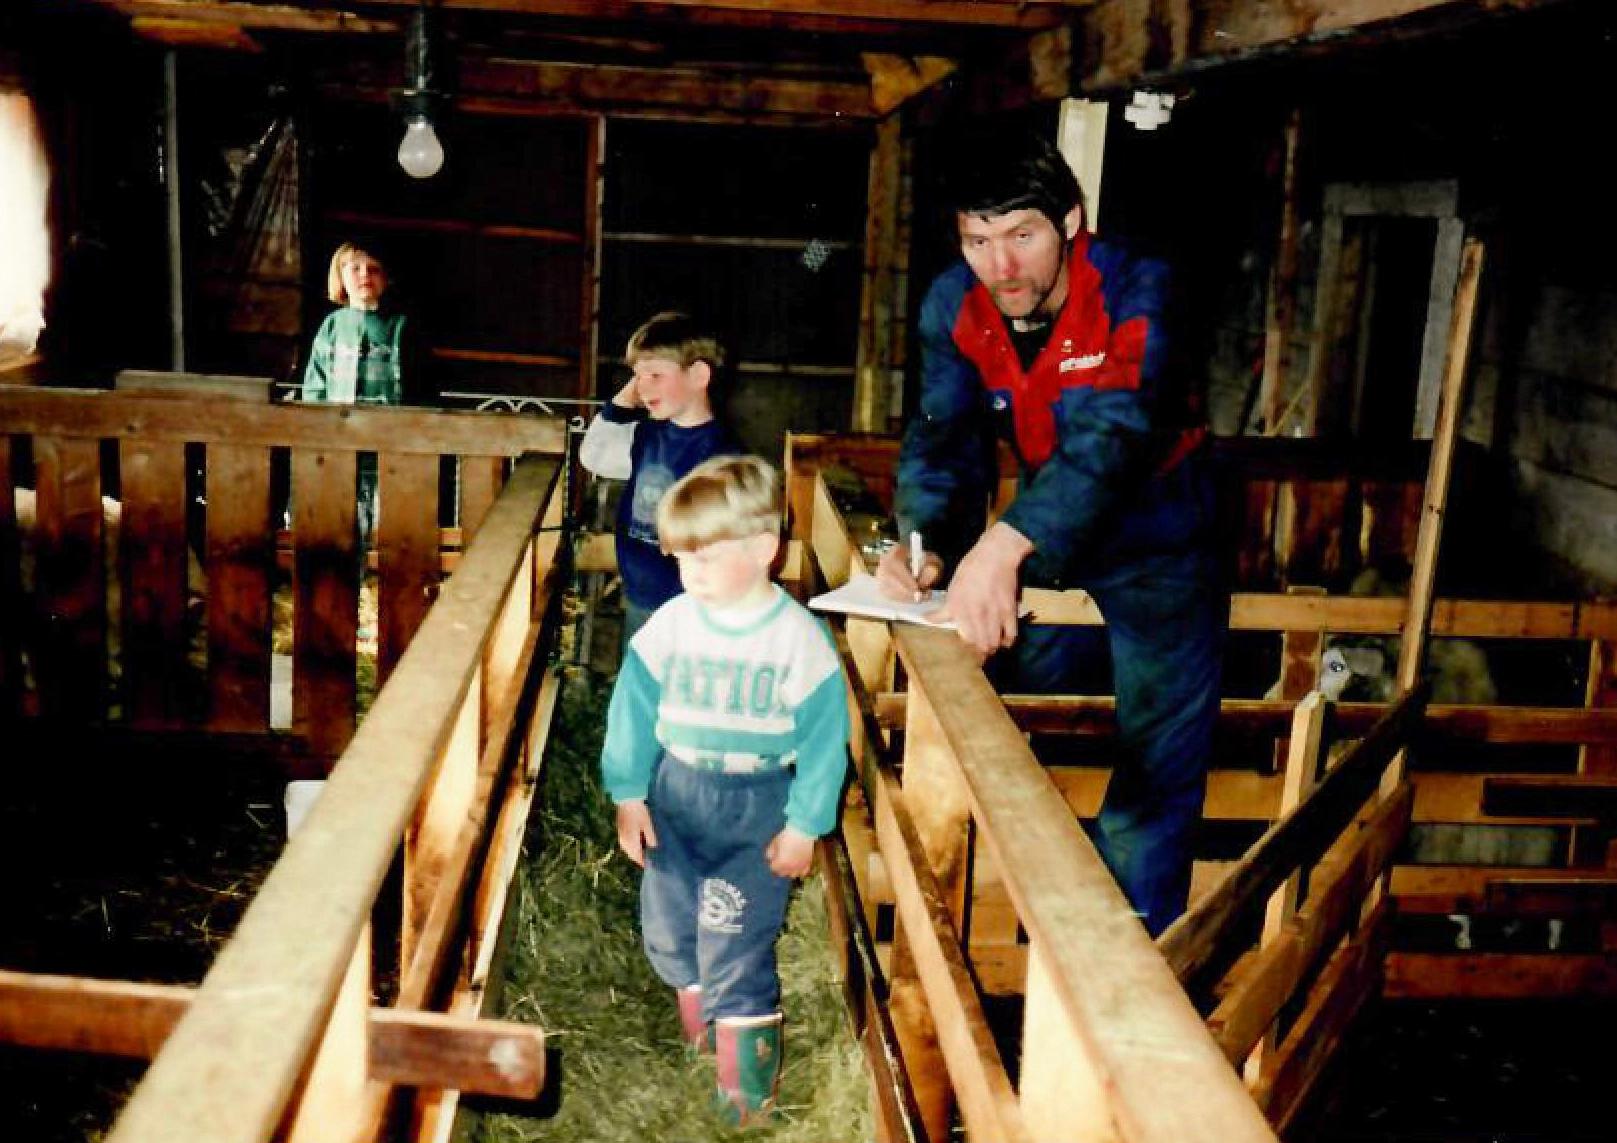 Torbjørn and his children inside the barn barn building